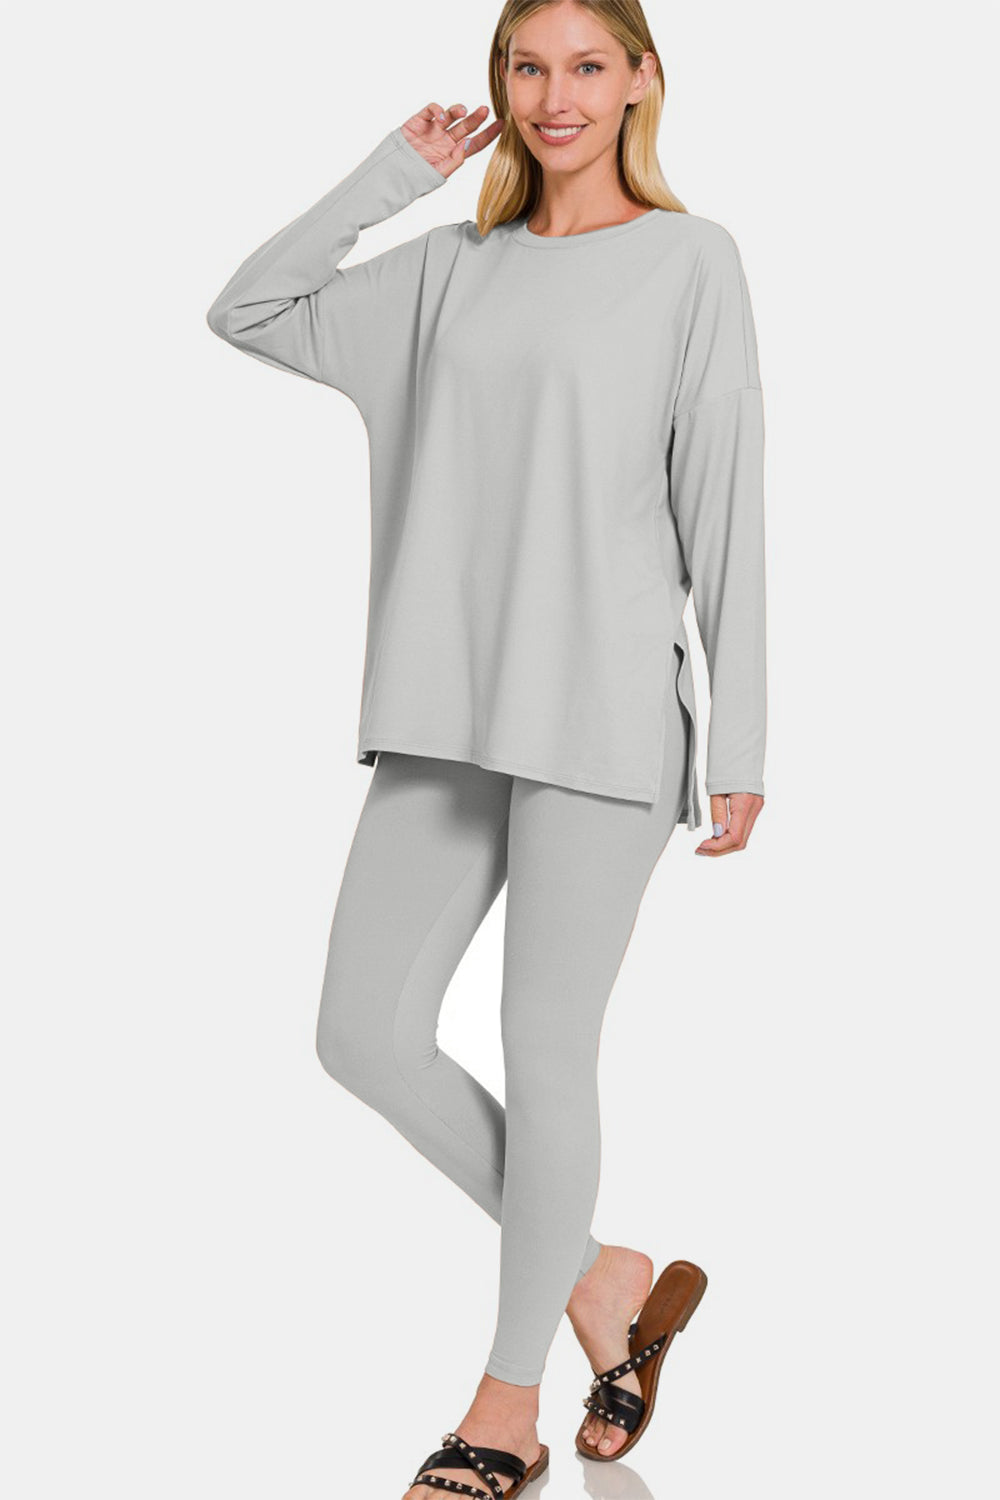 Zenana Light Grey Brushed Microfiber Long Sleeve Top and Leggings Lounge Set Trendsi